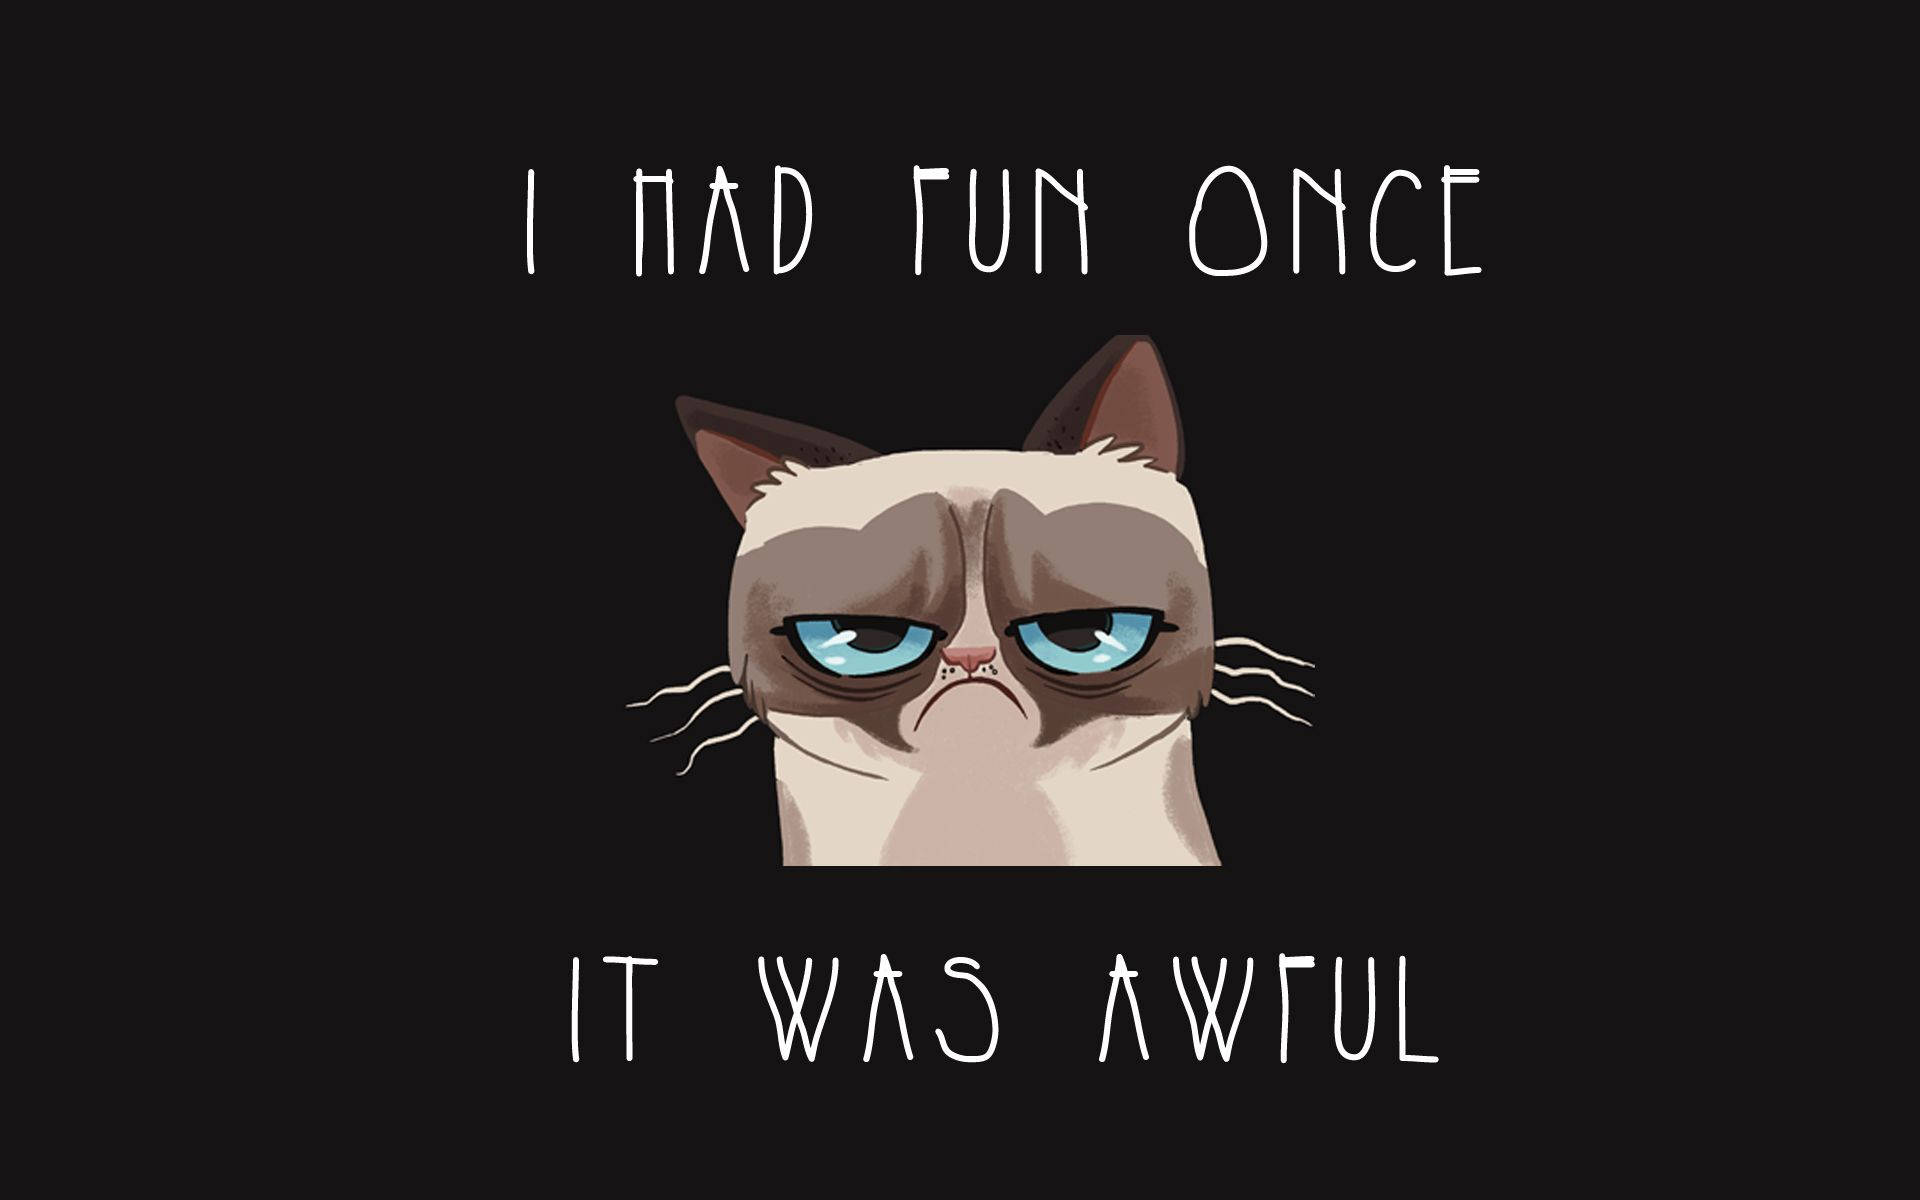 Annoyed Cartoon Cat Expressing Dissatisfaction